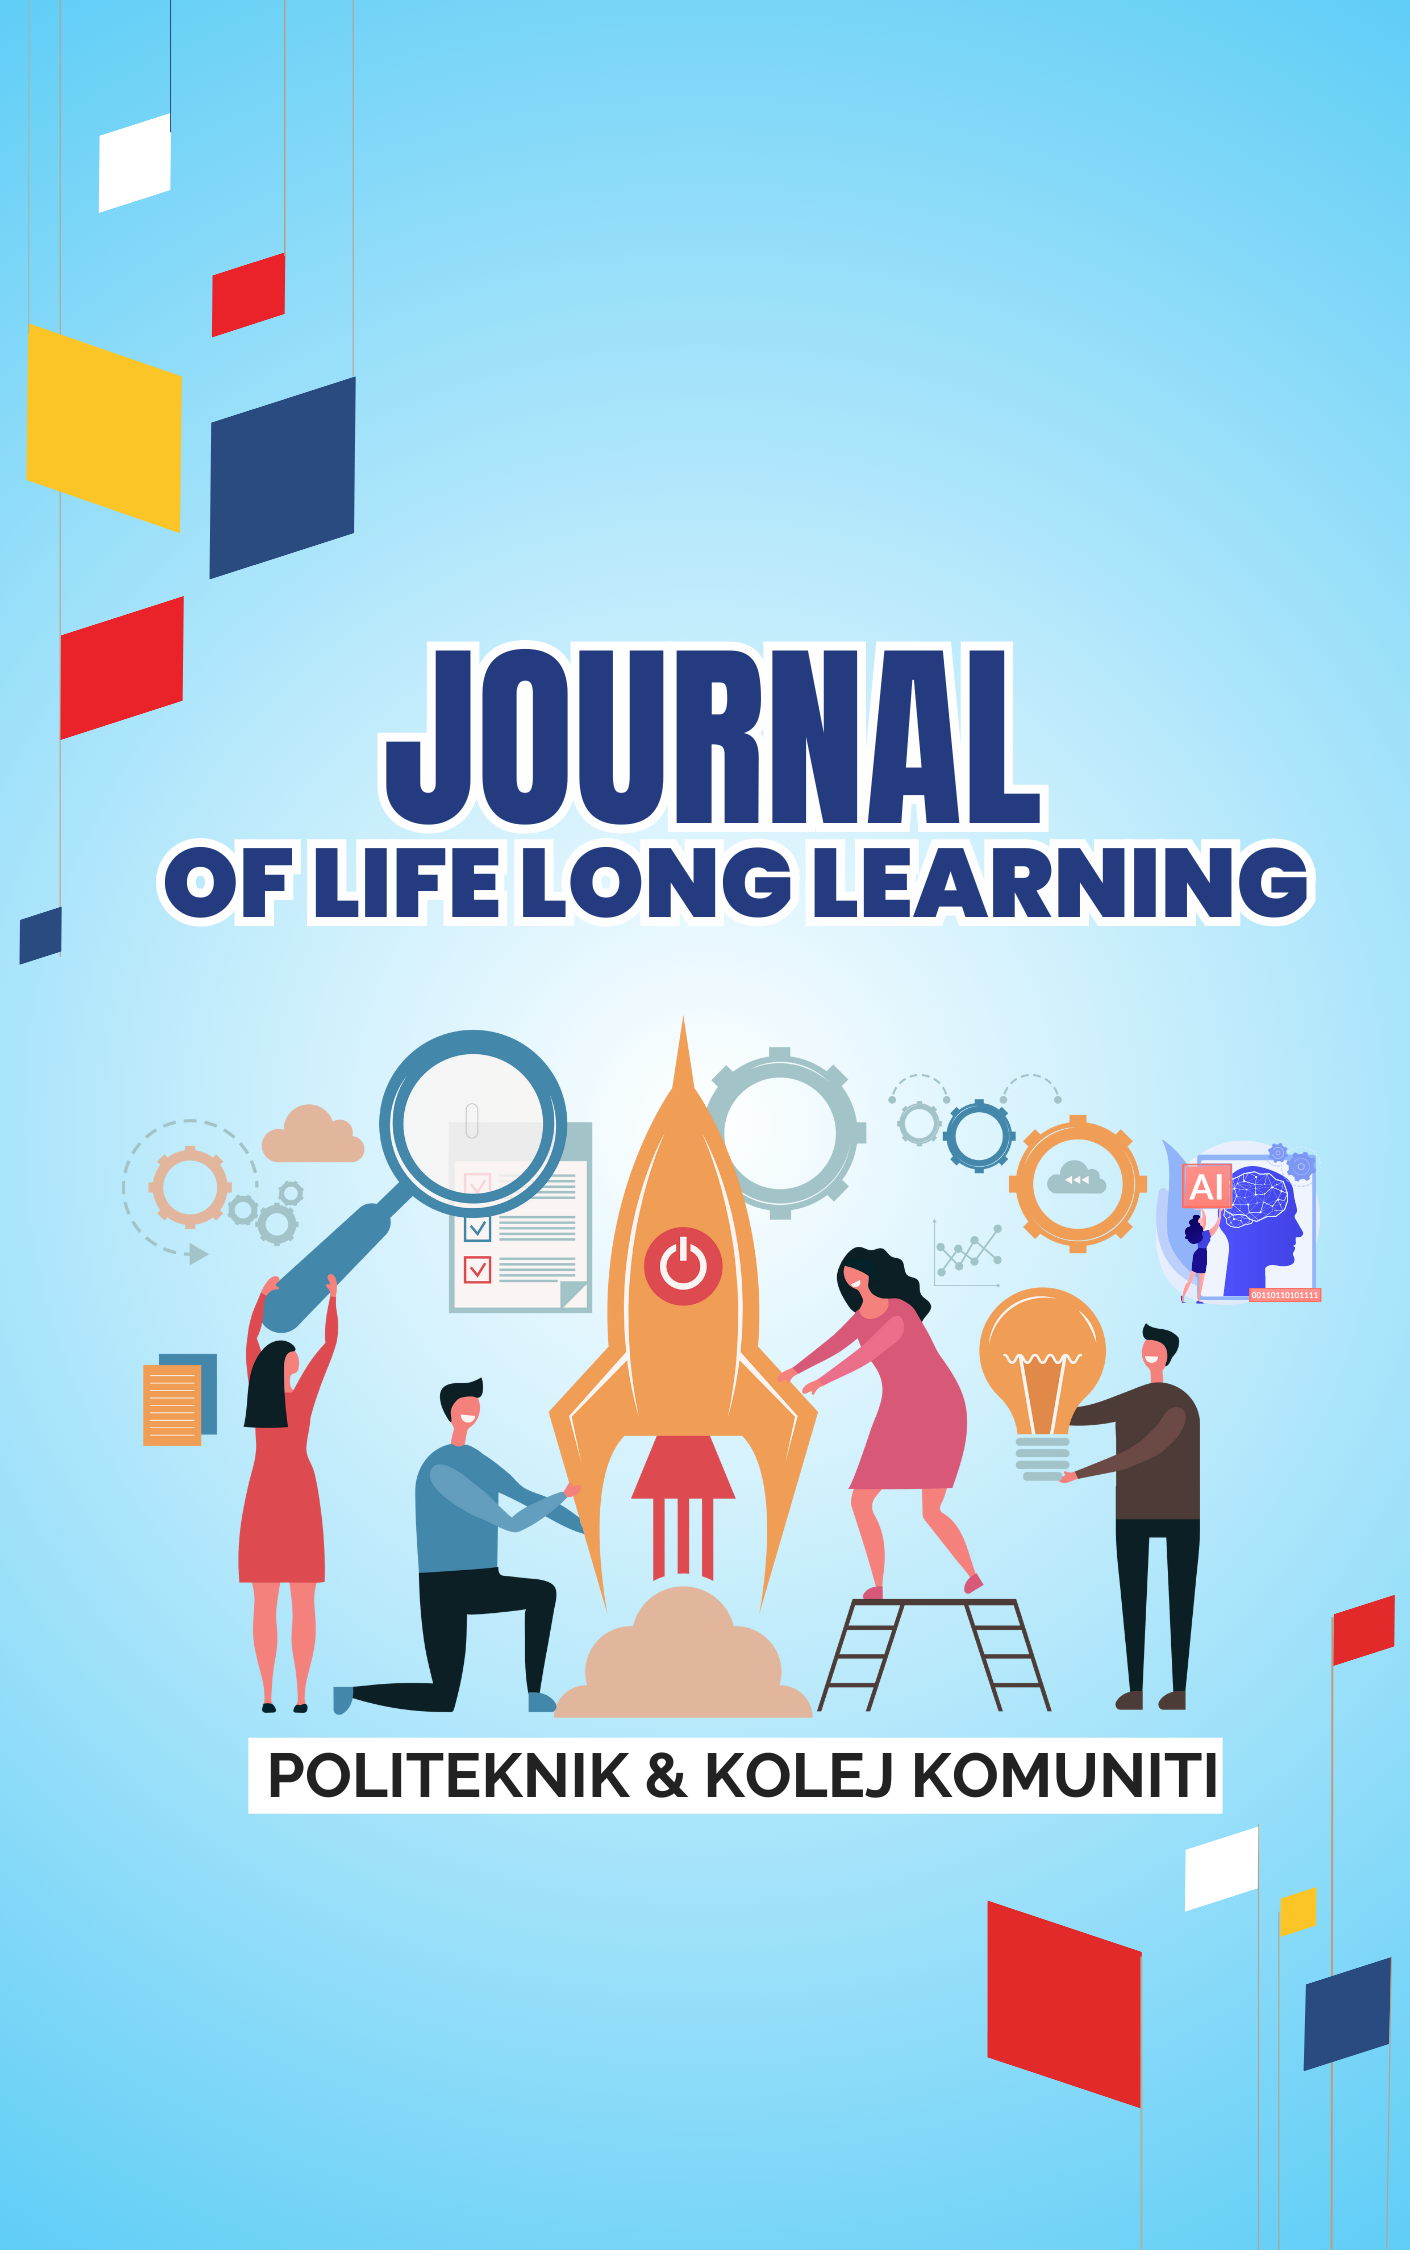 					View Vol. 3 No. 1 (2019): Politeknik & Kolej Komuniti Journal of Life Long Learning
				